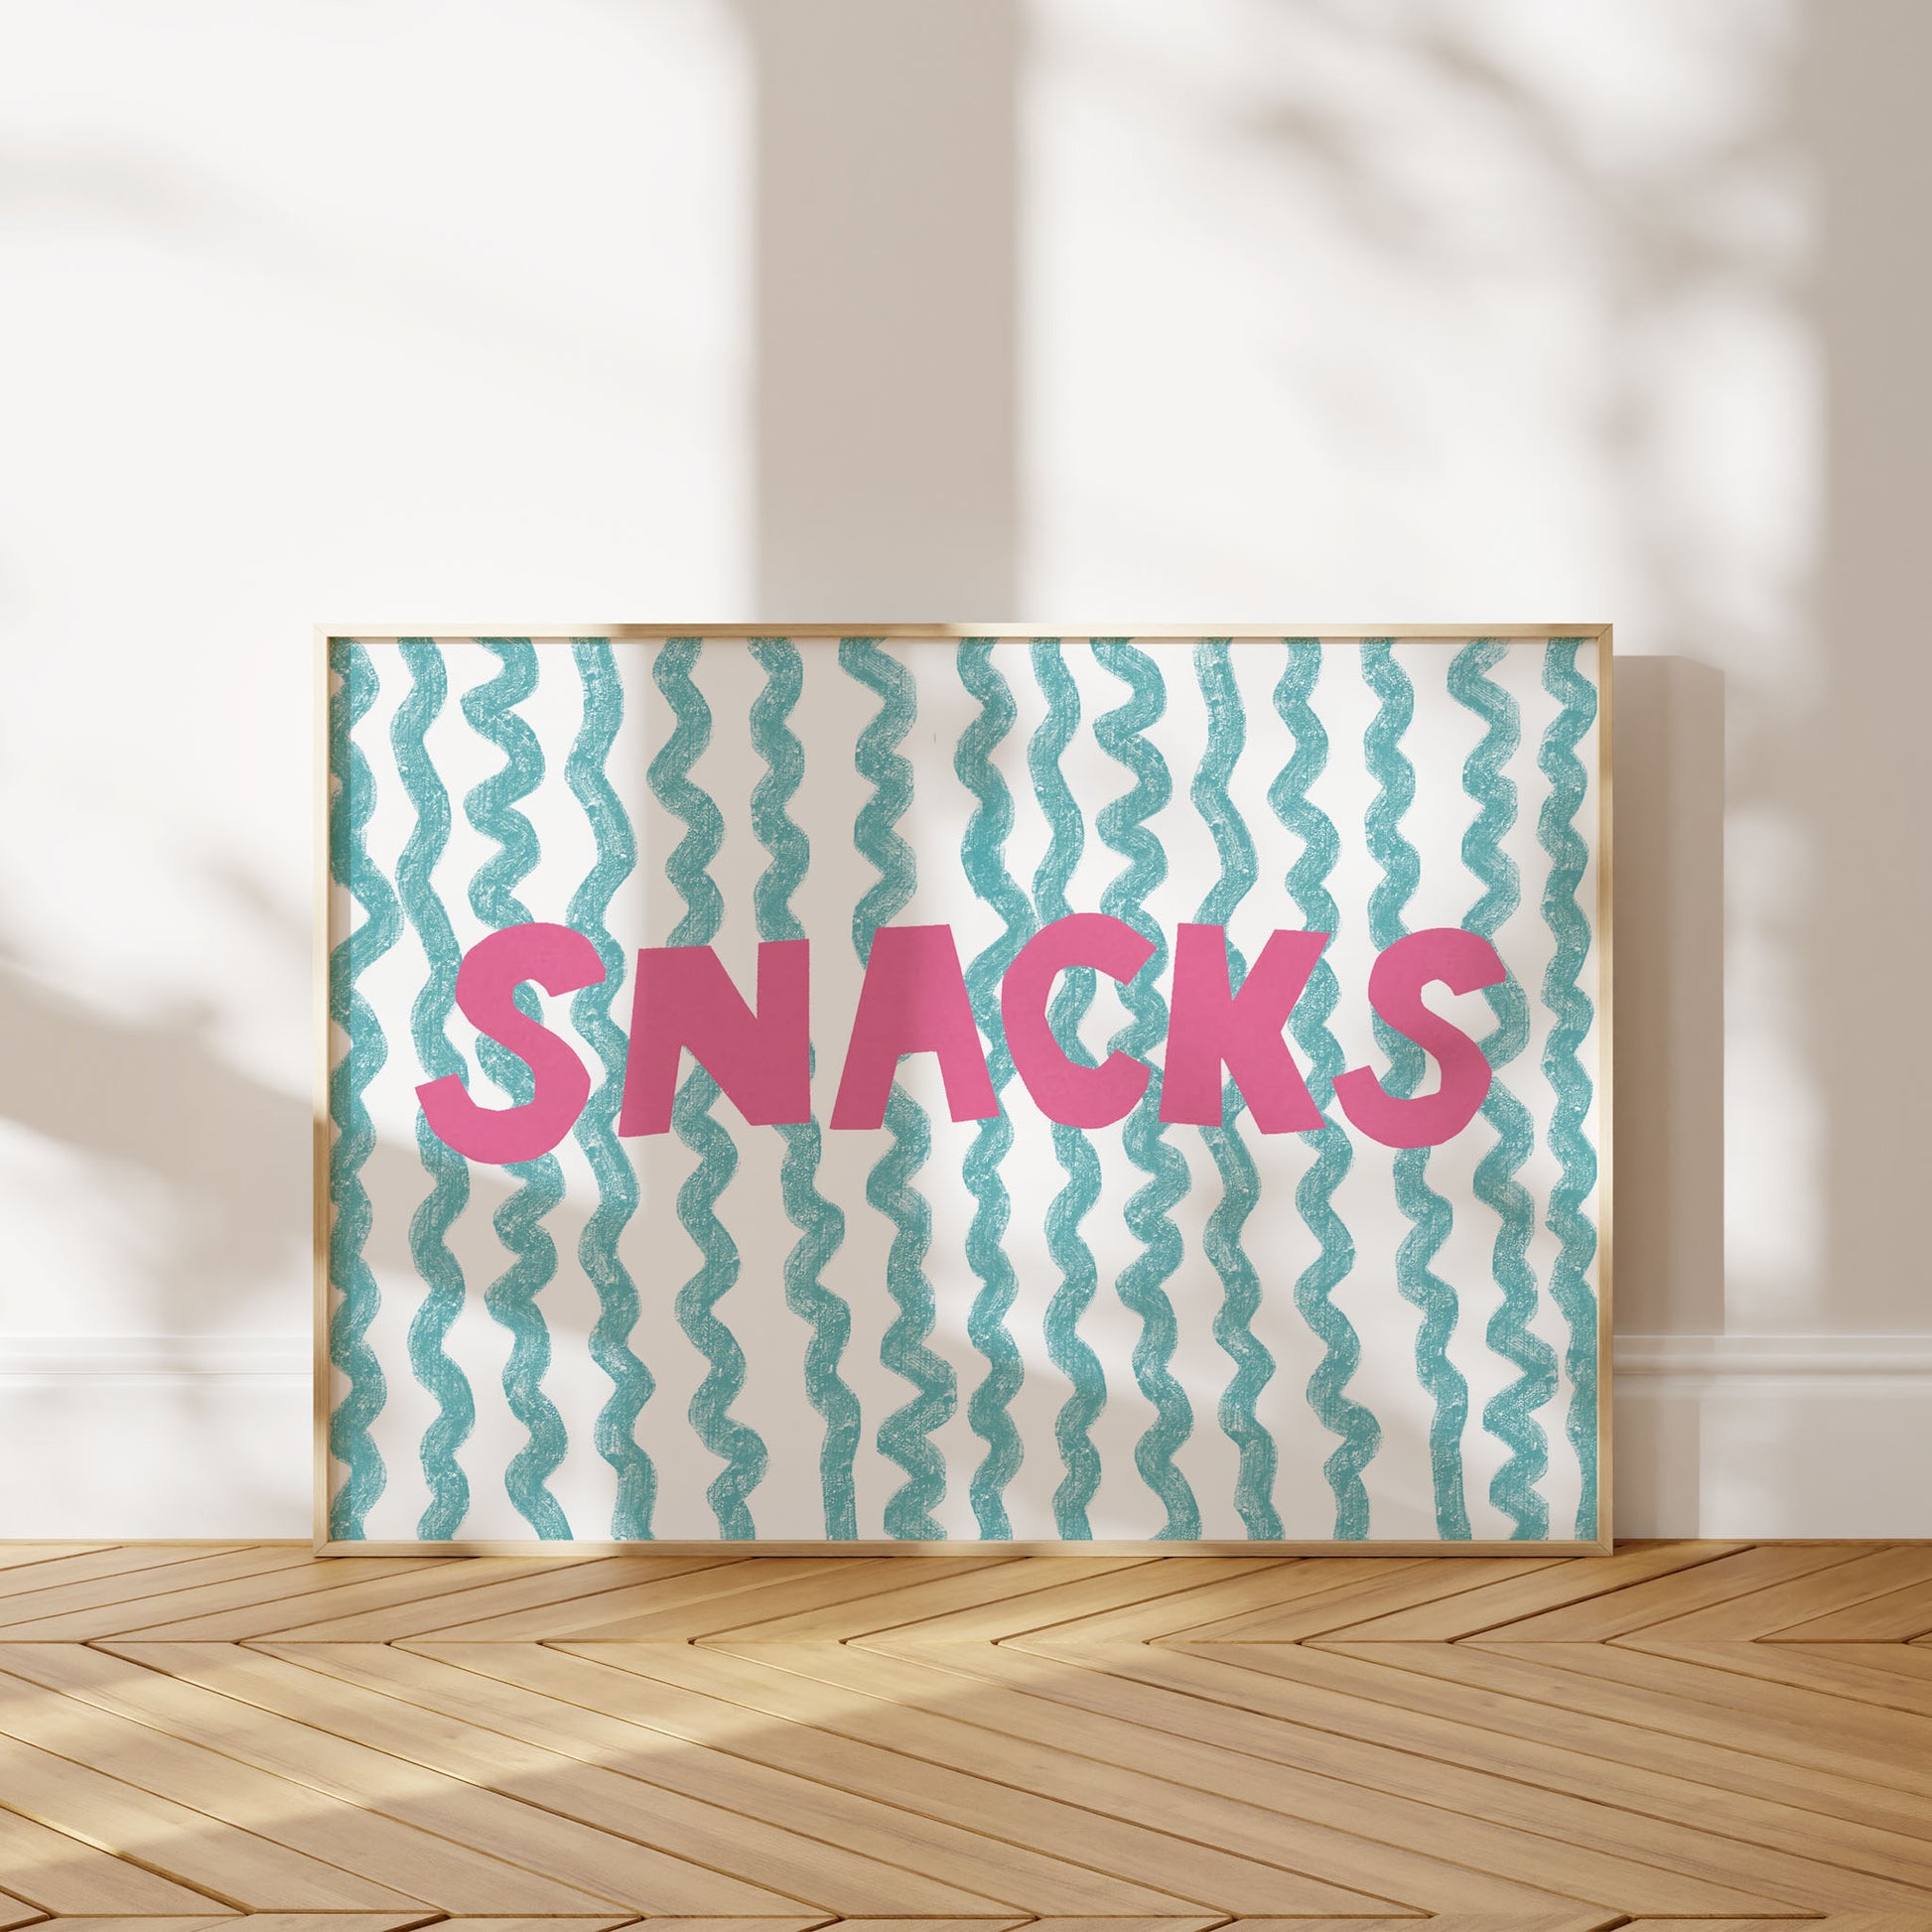 snacks art print